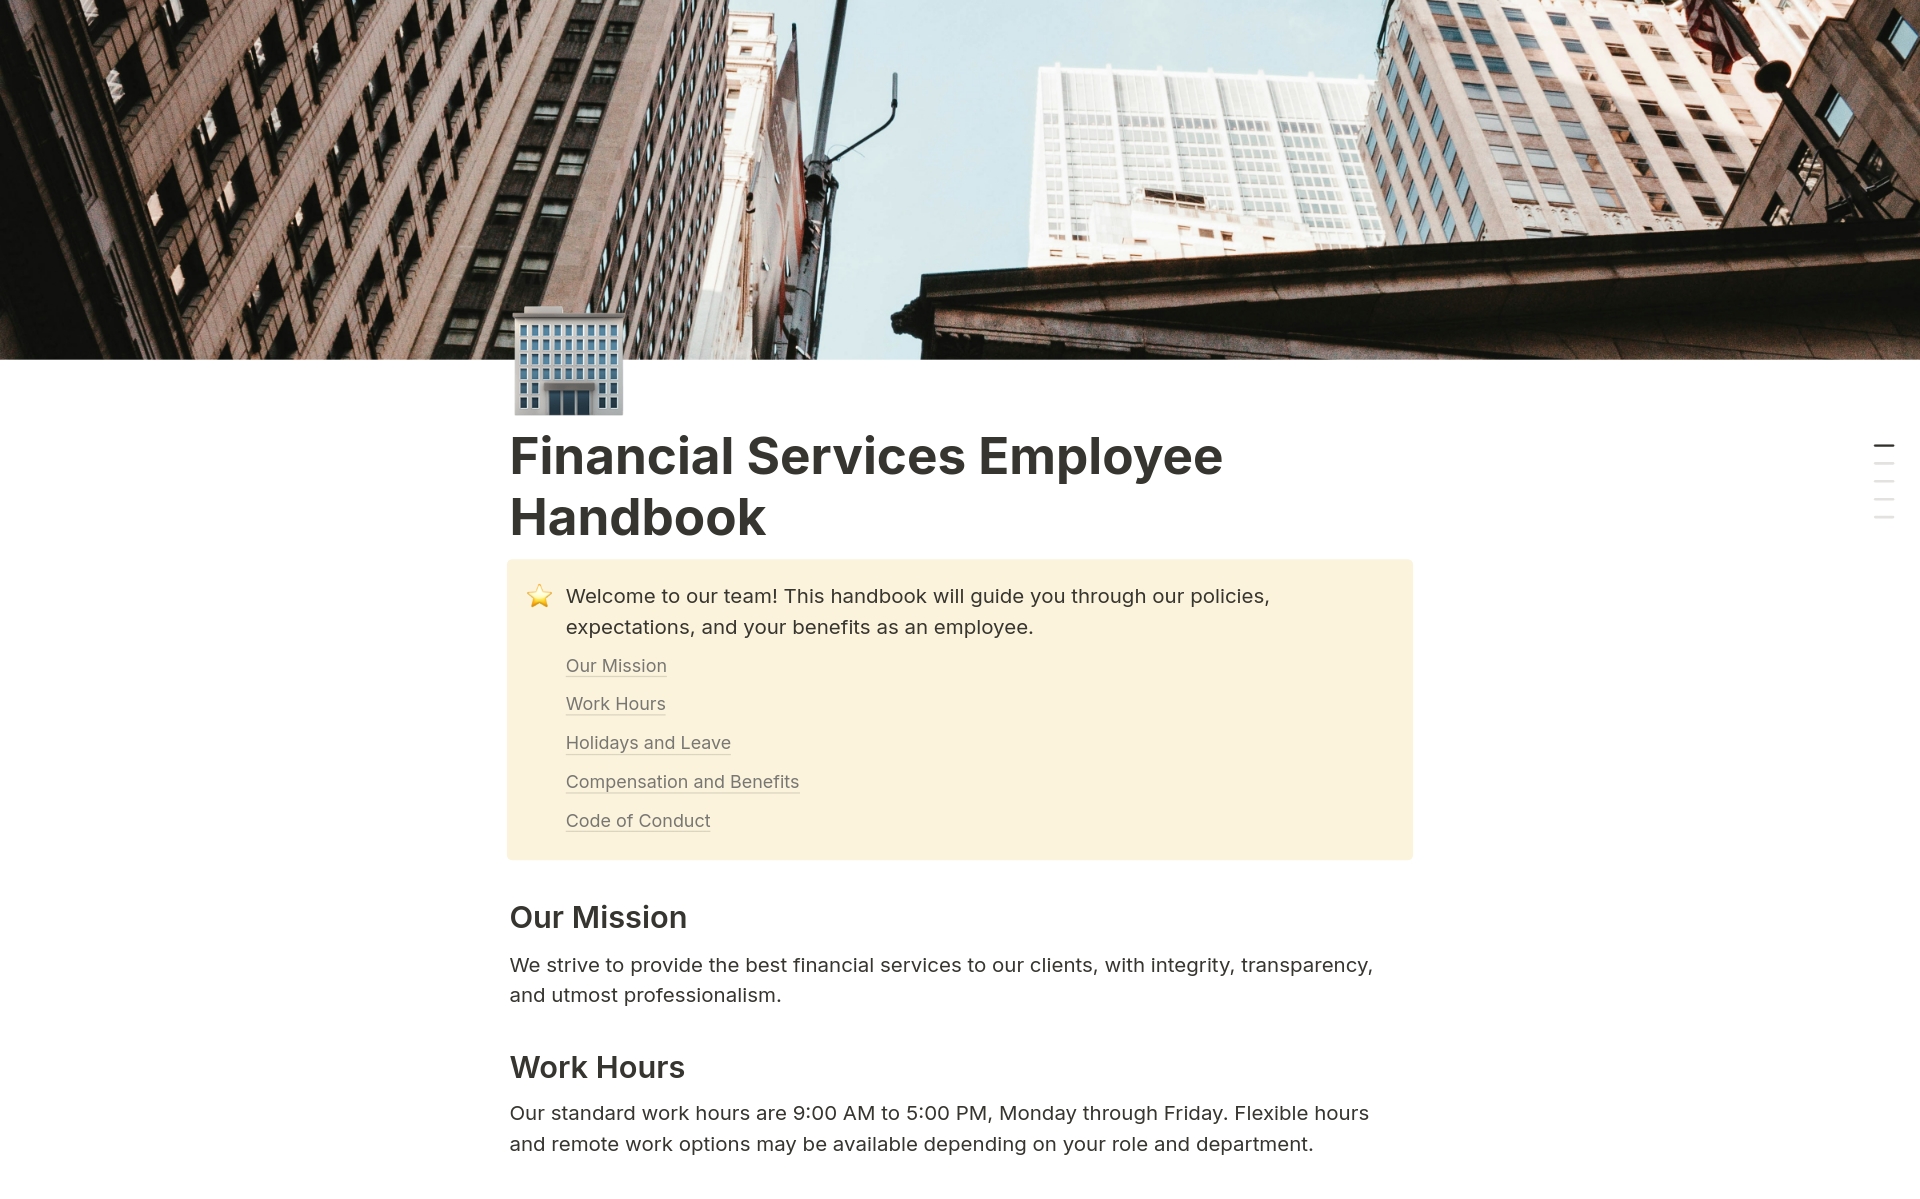 Aperçu du modèle de Financial Services Employee Handbook